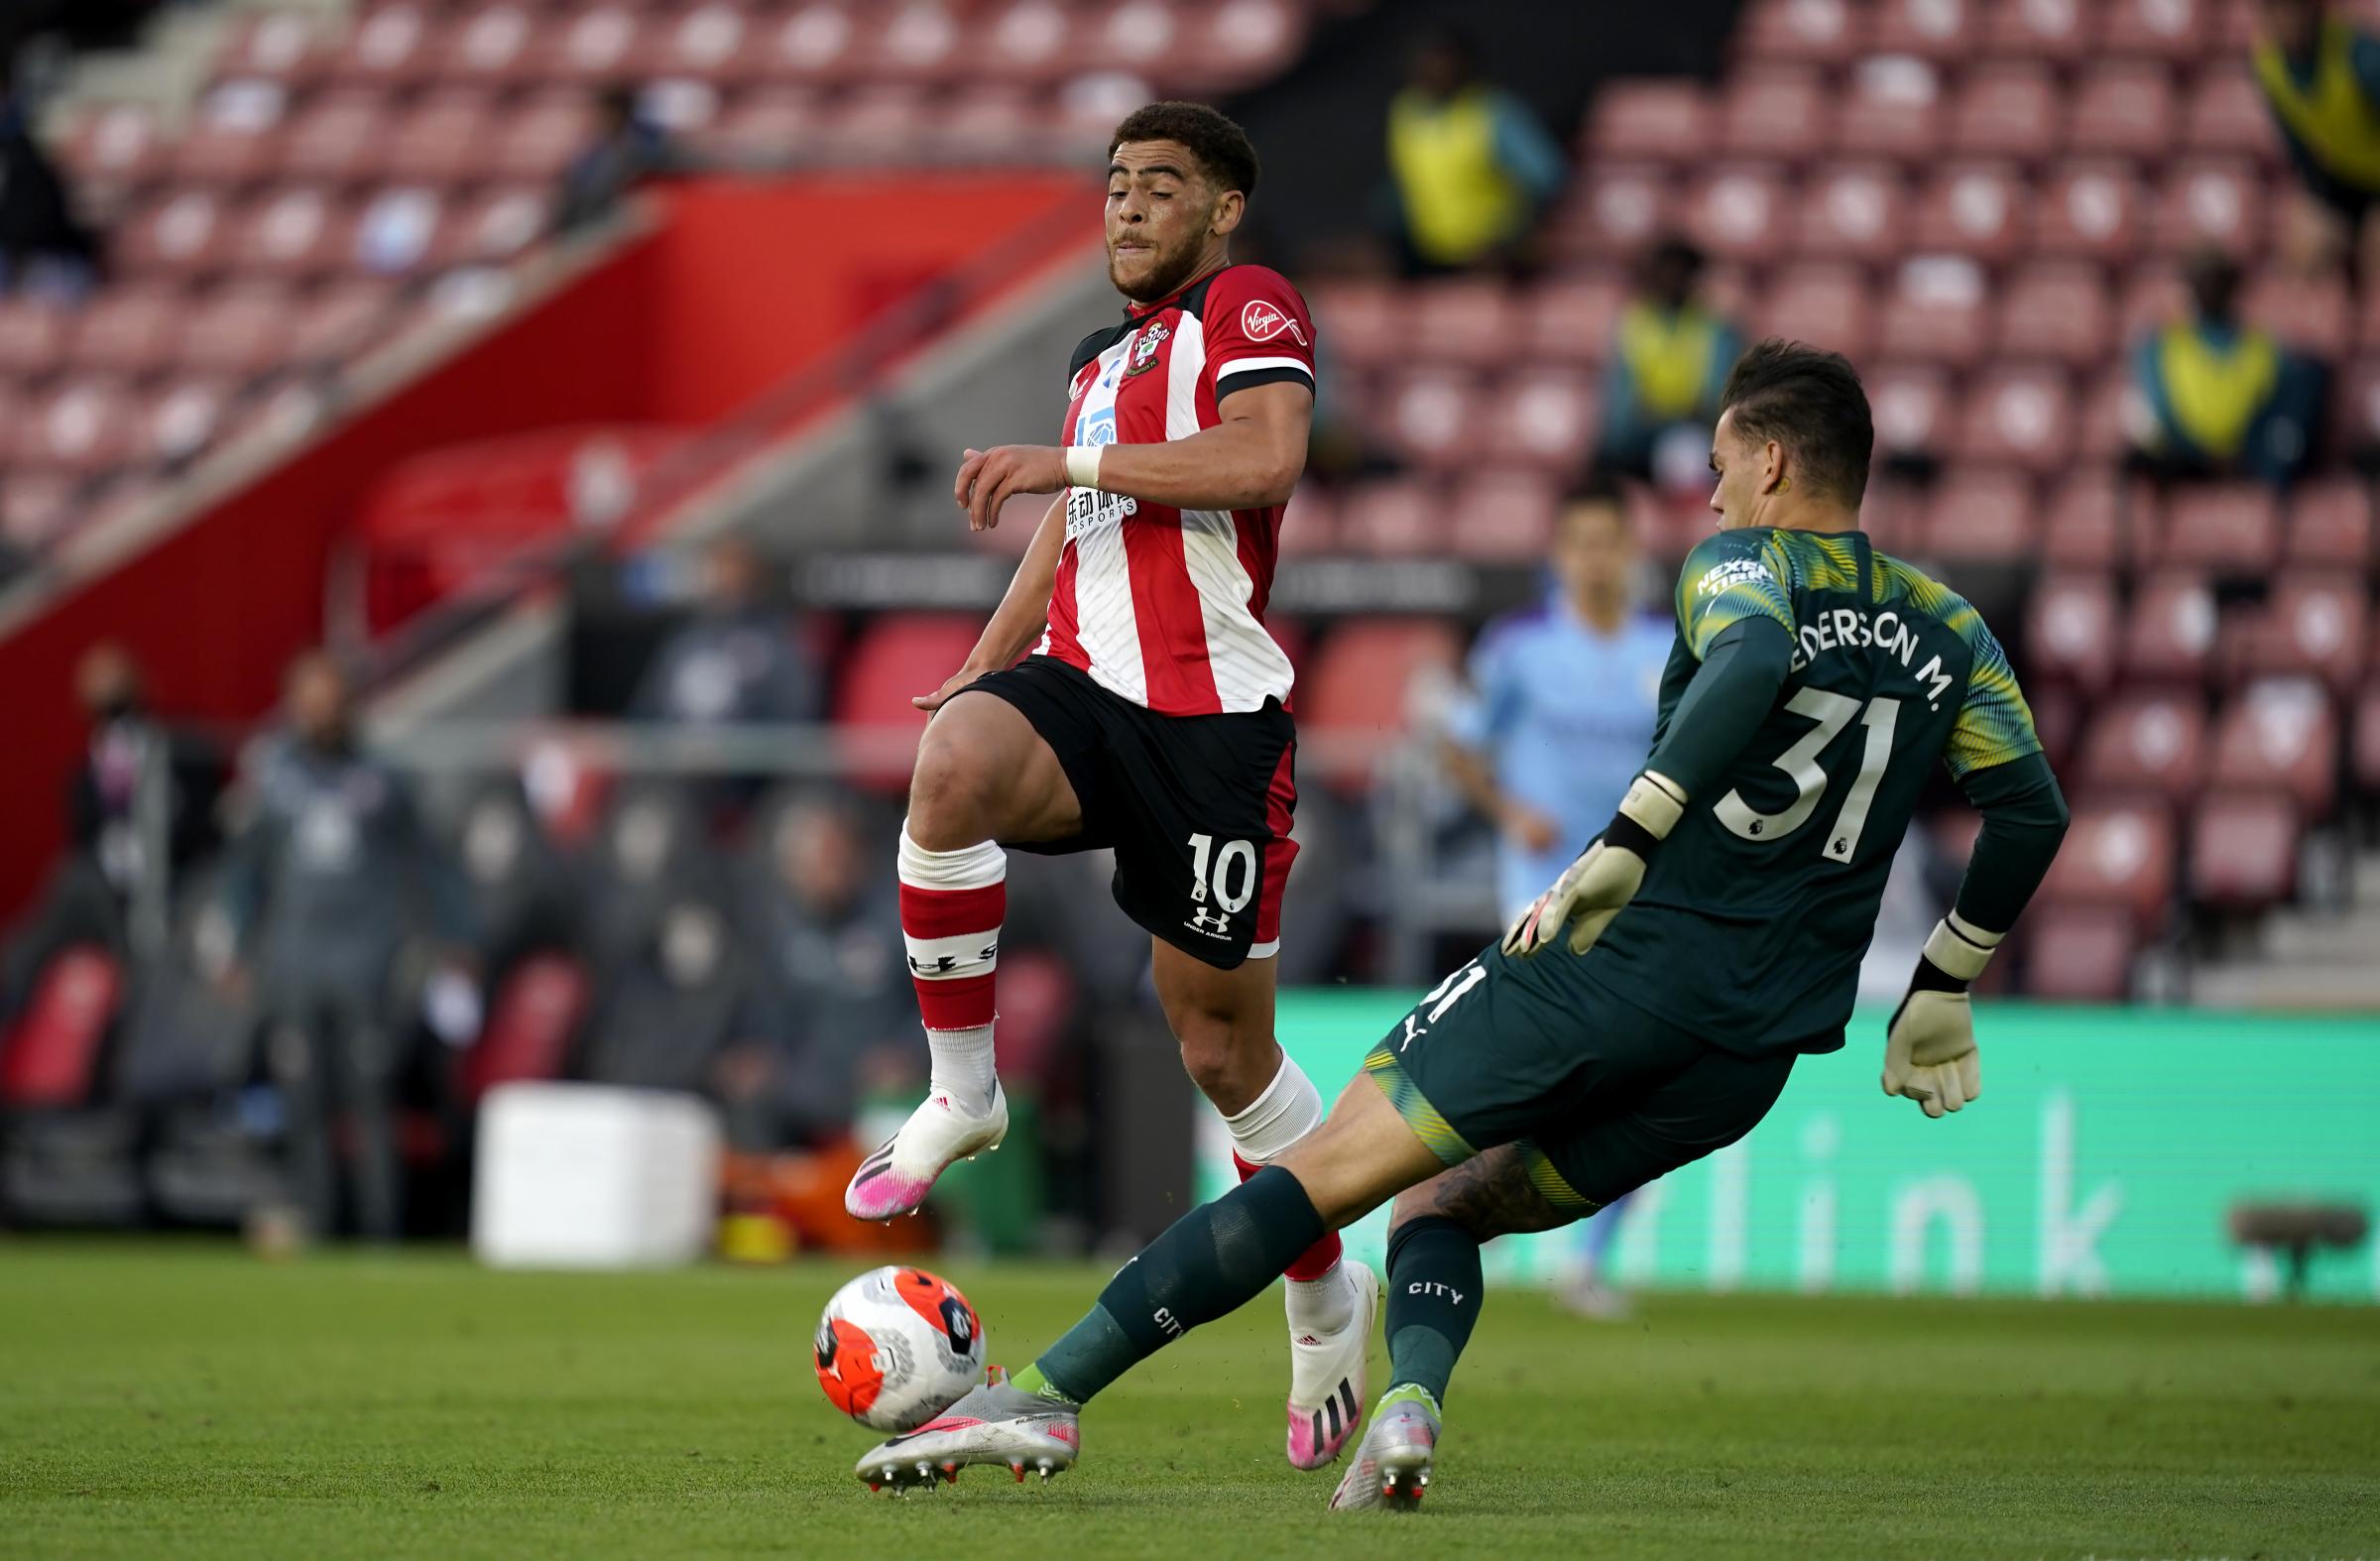 Southampton striker Che Adams hopes to embark on goalscoring run